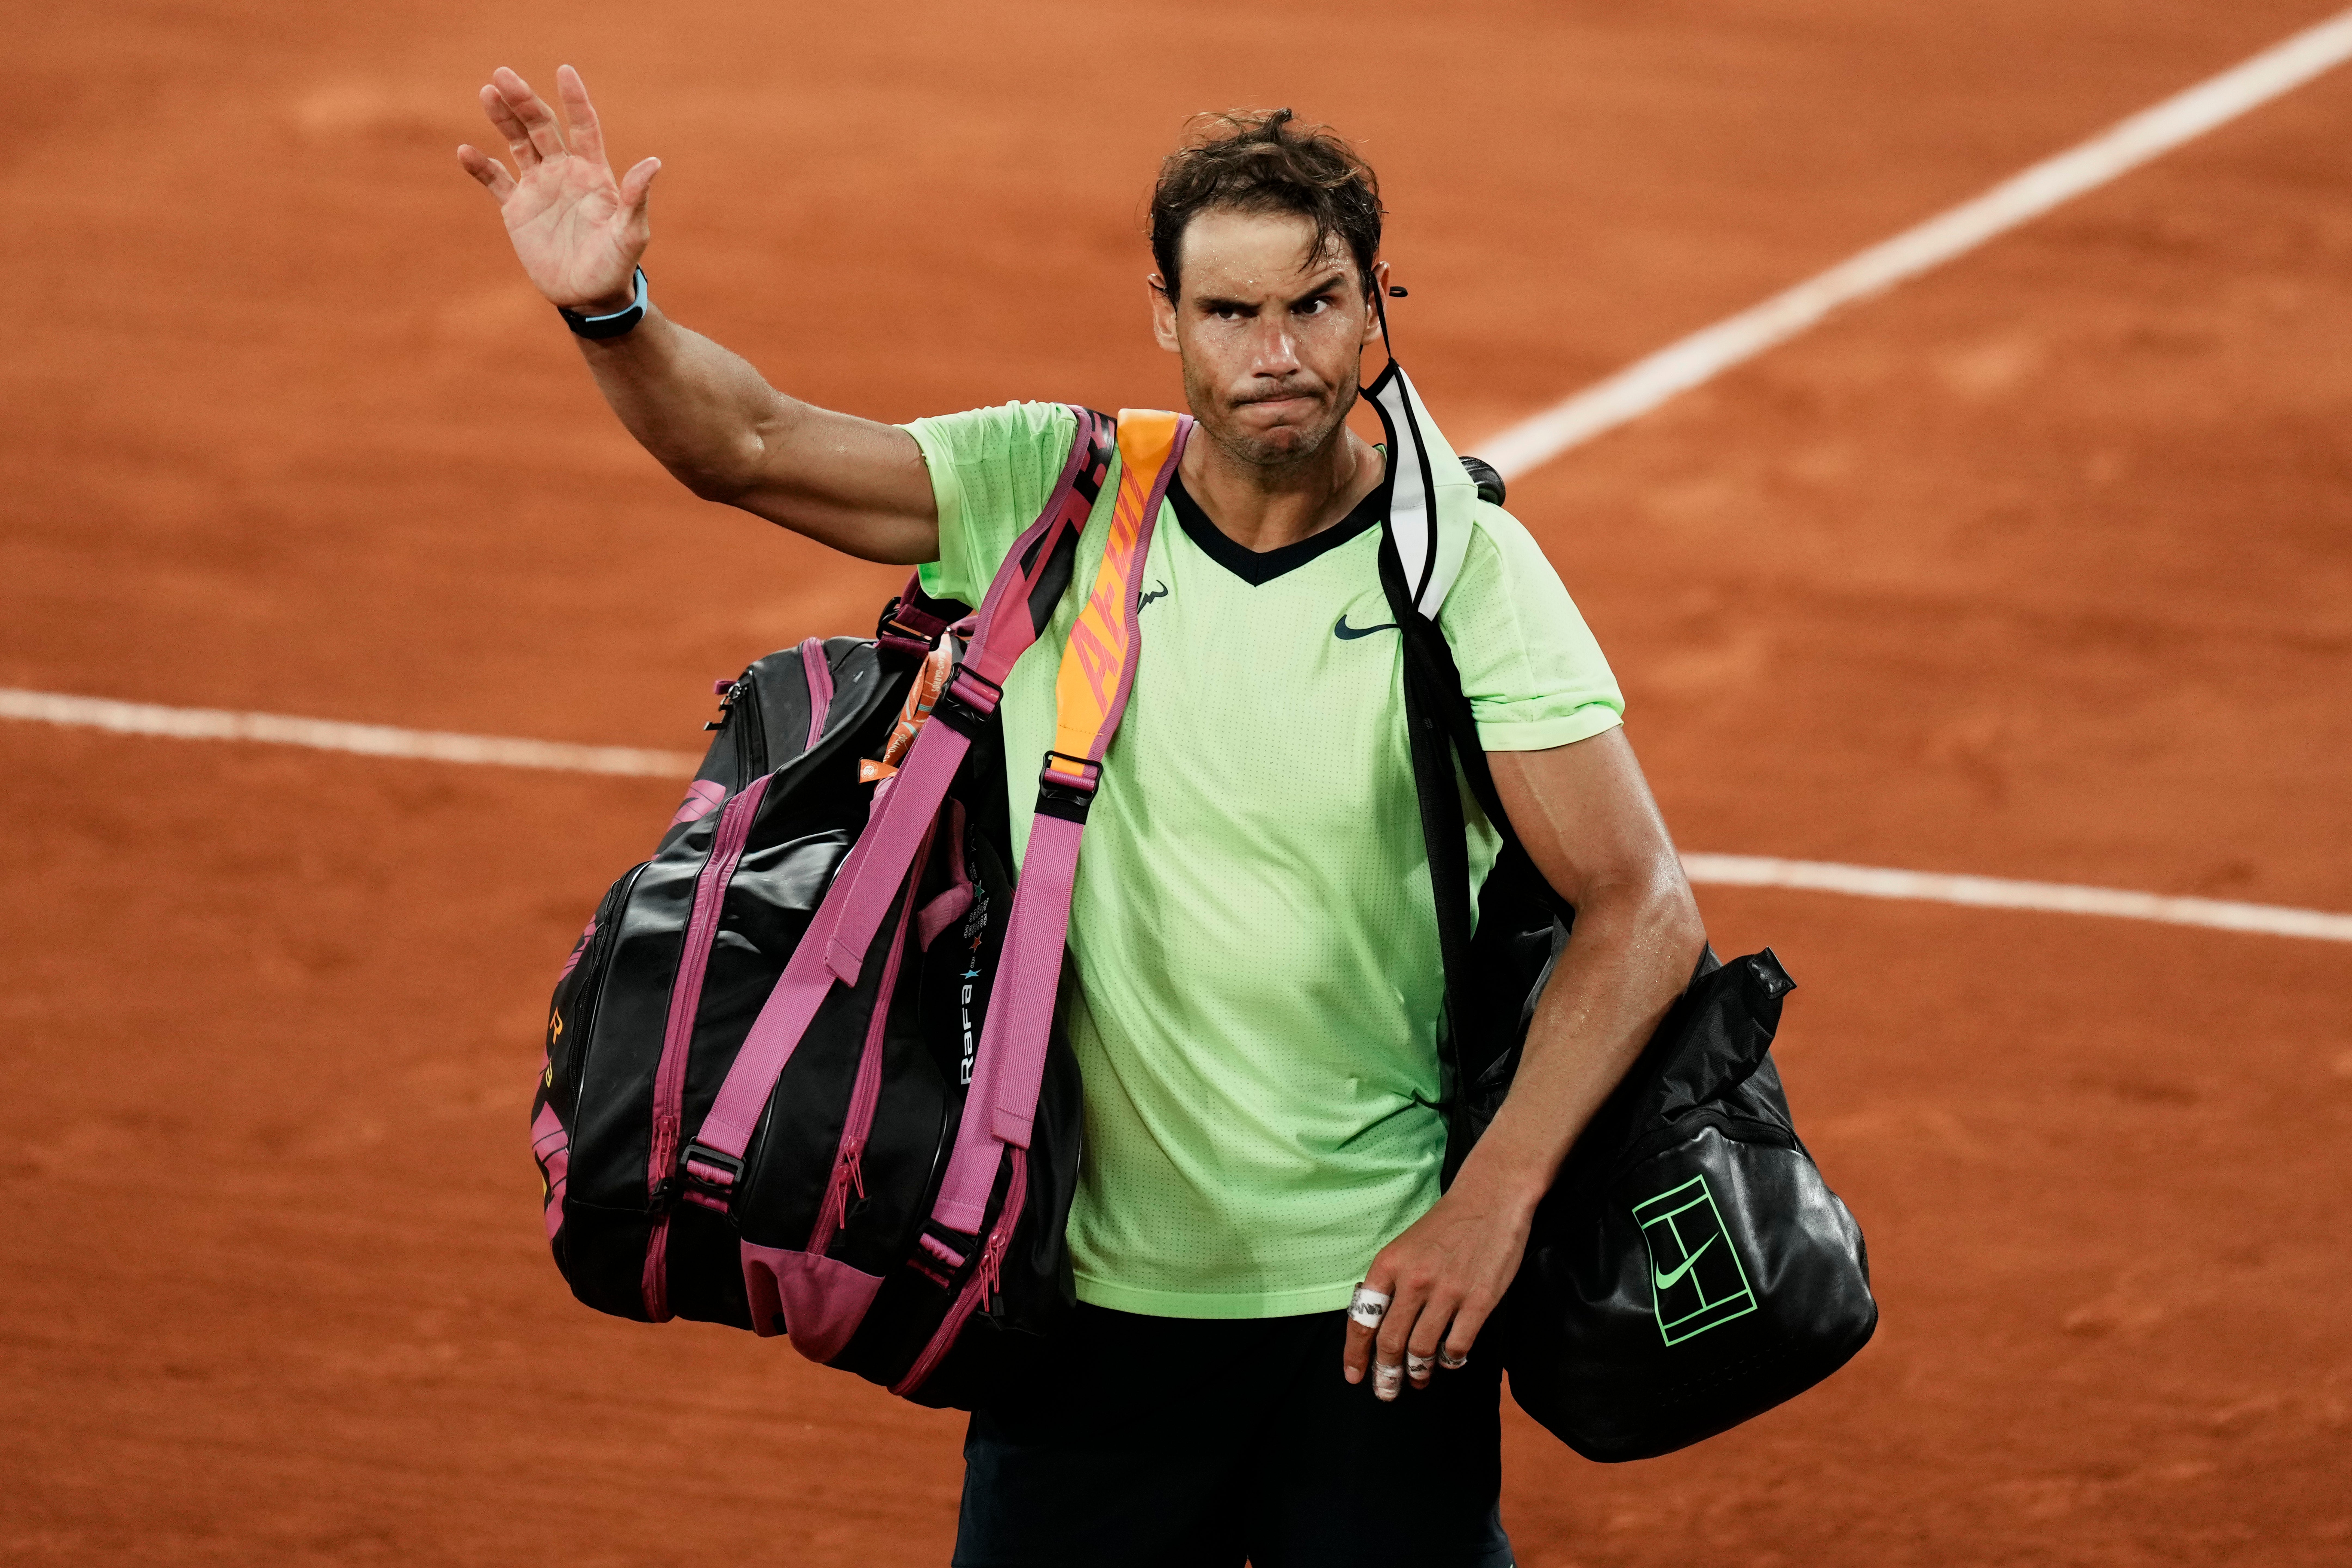 Rafael Nadal struggled physically during his French Open semi-final against Novak Djokovic